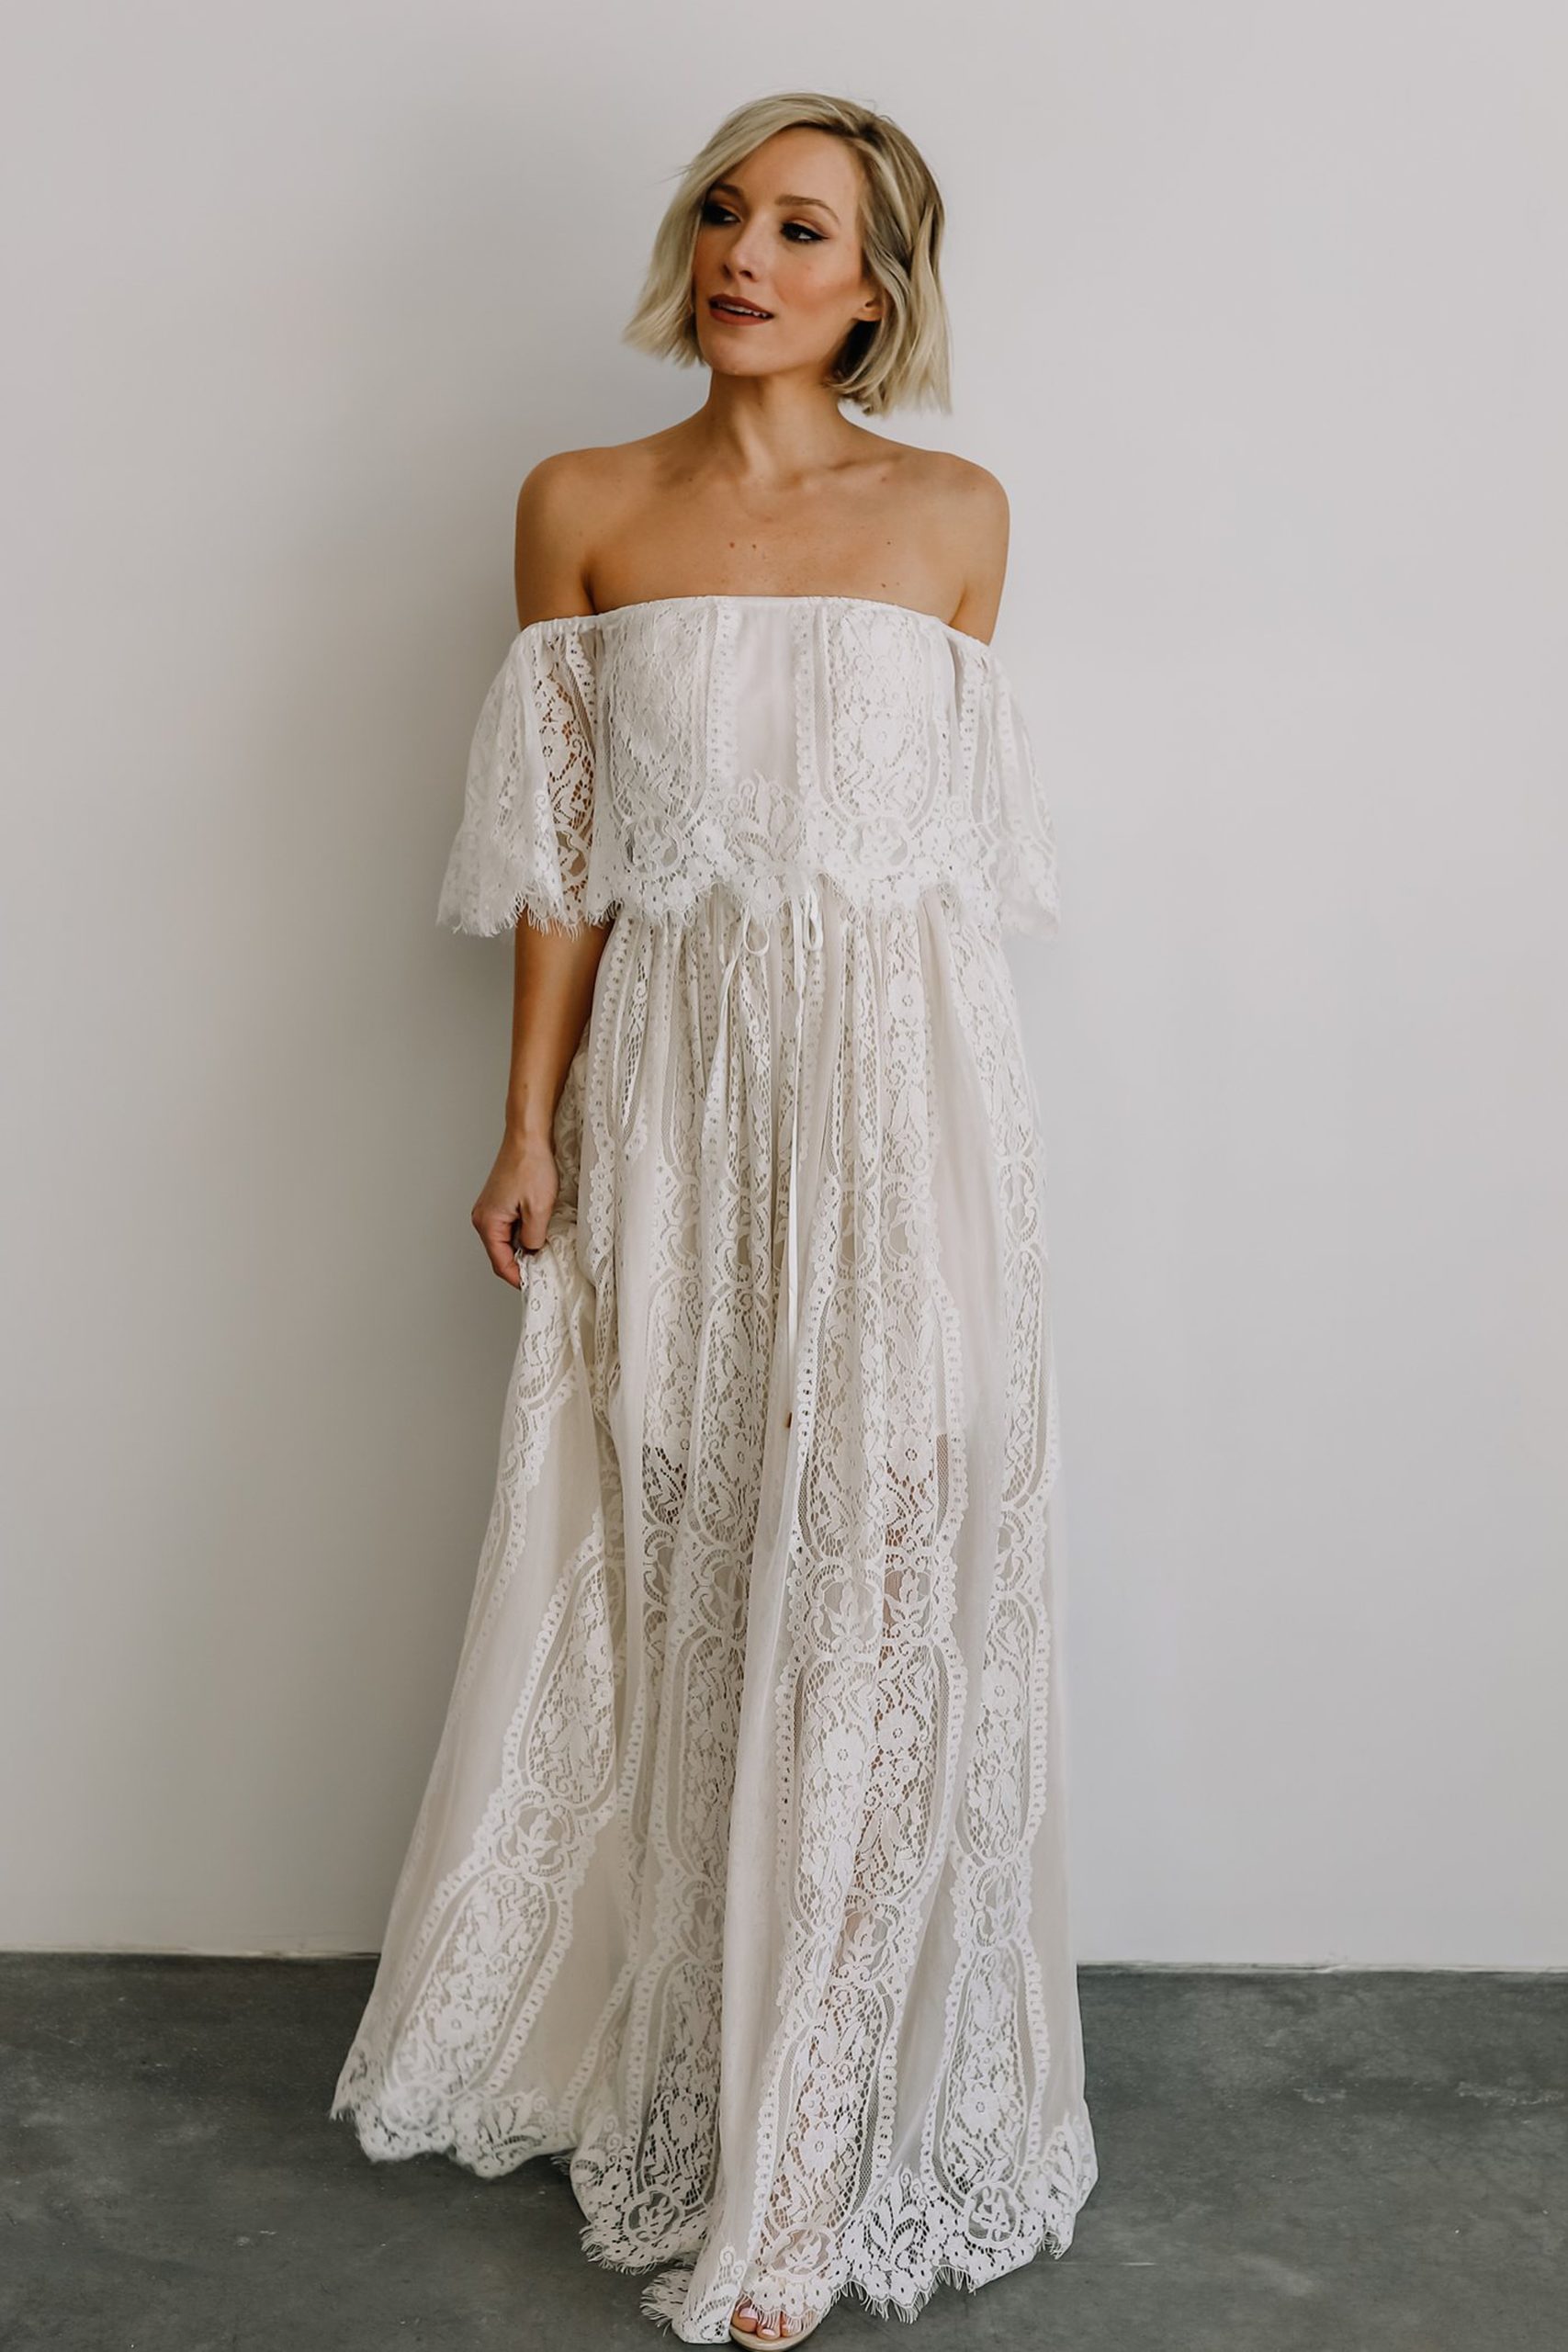 Fall dress options under $100 Caroline Lace Maxi Dress from Baltic Born